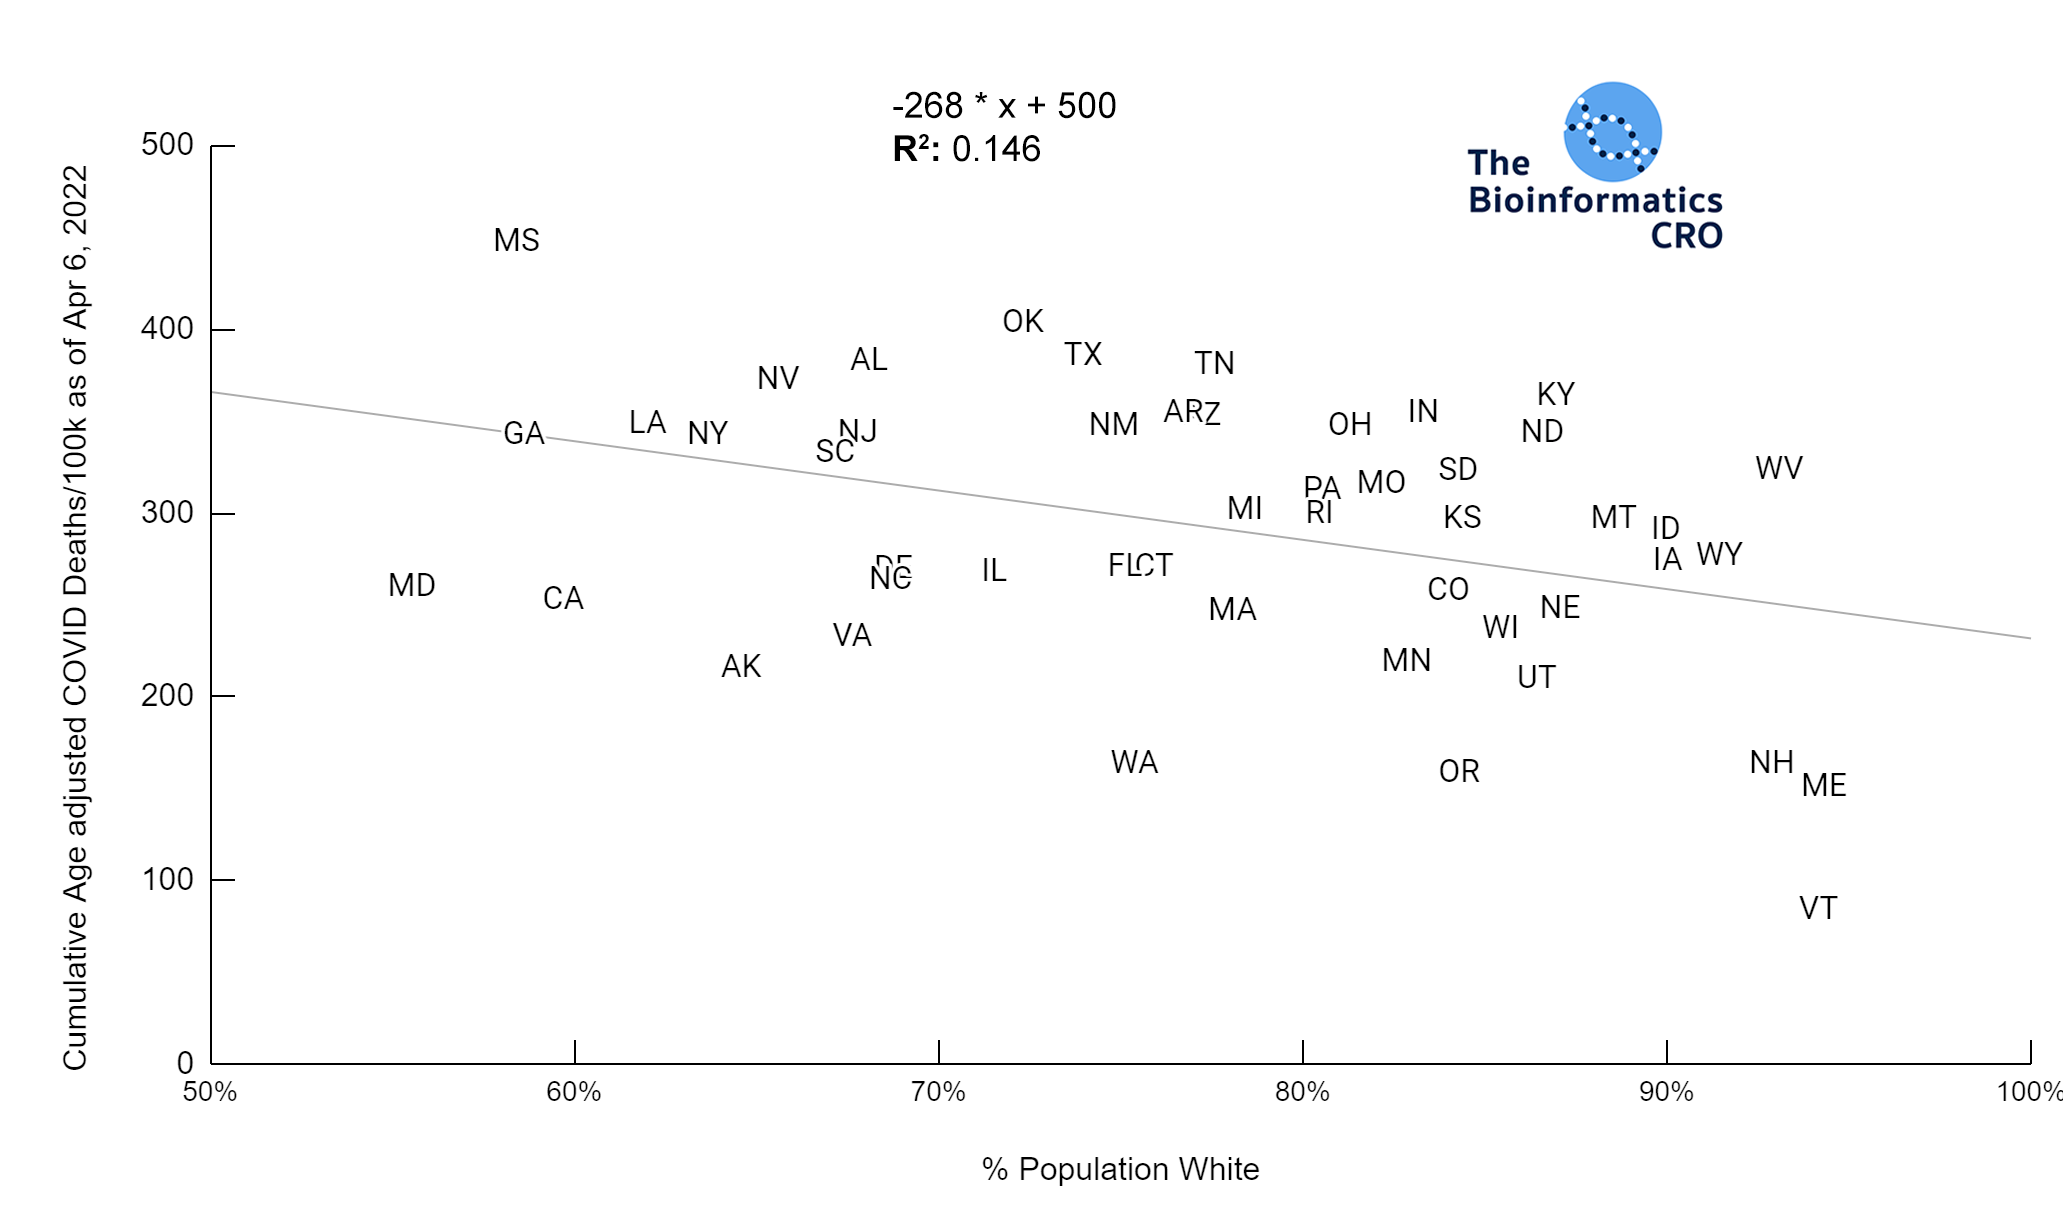 Percent Population White versus Age-adjusted deaths | y = -555 * x + 645 | R^2 = 0.4